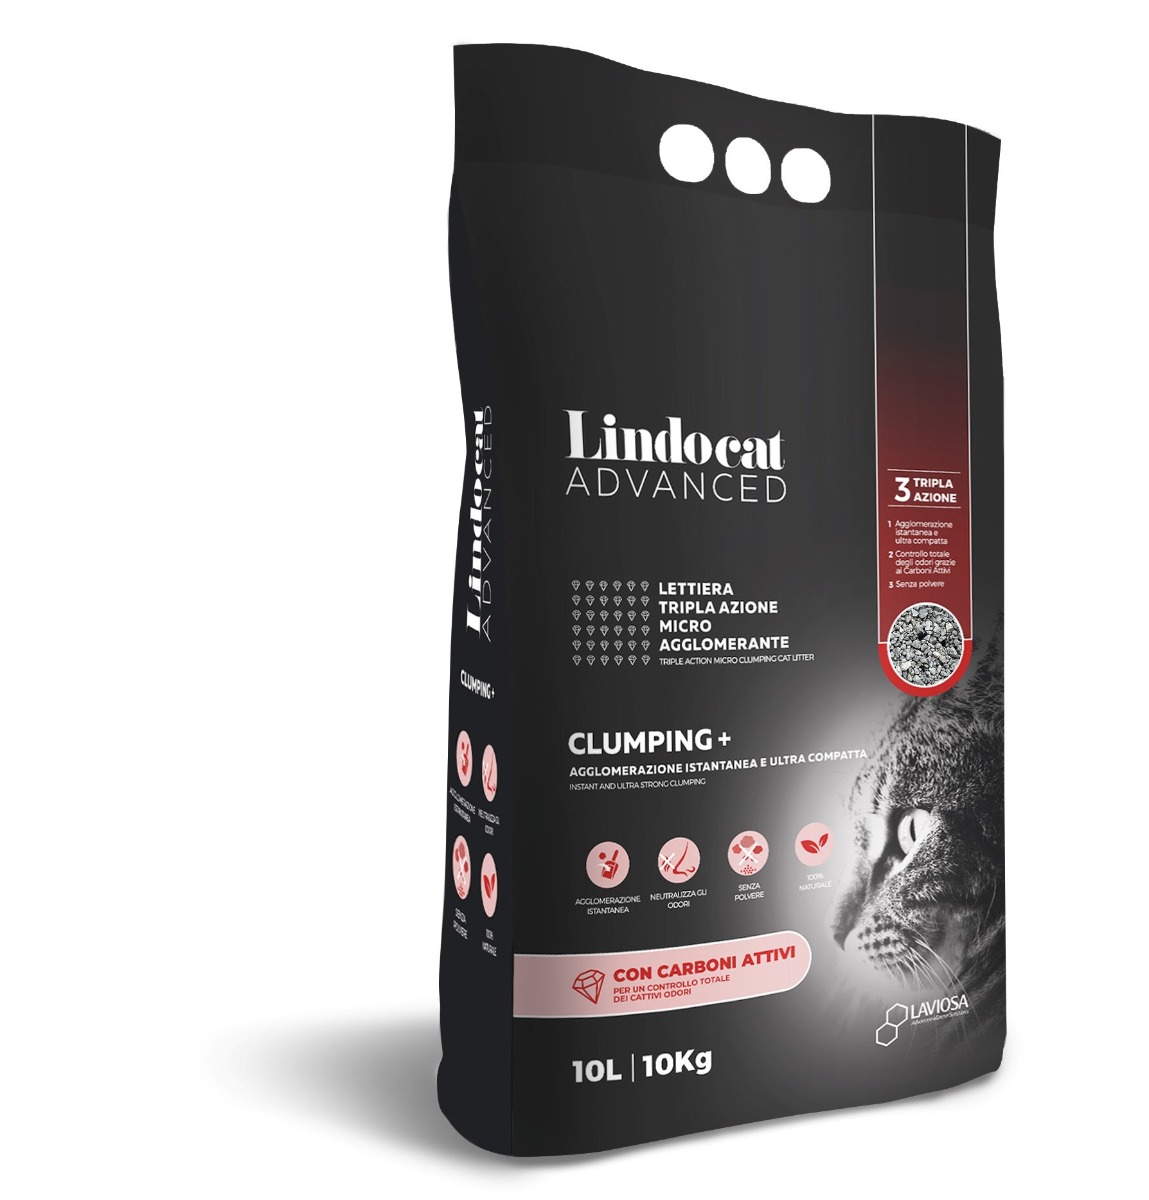 Image of Lindocat Advanced Clumping Plus 10 L - Carboni attivi